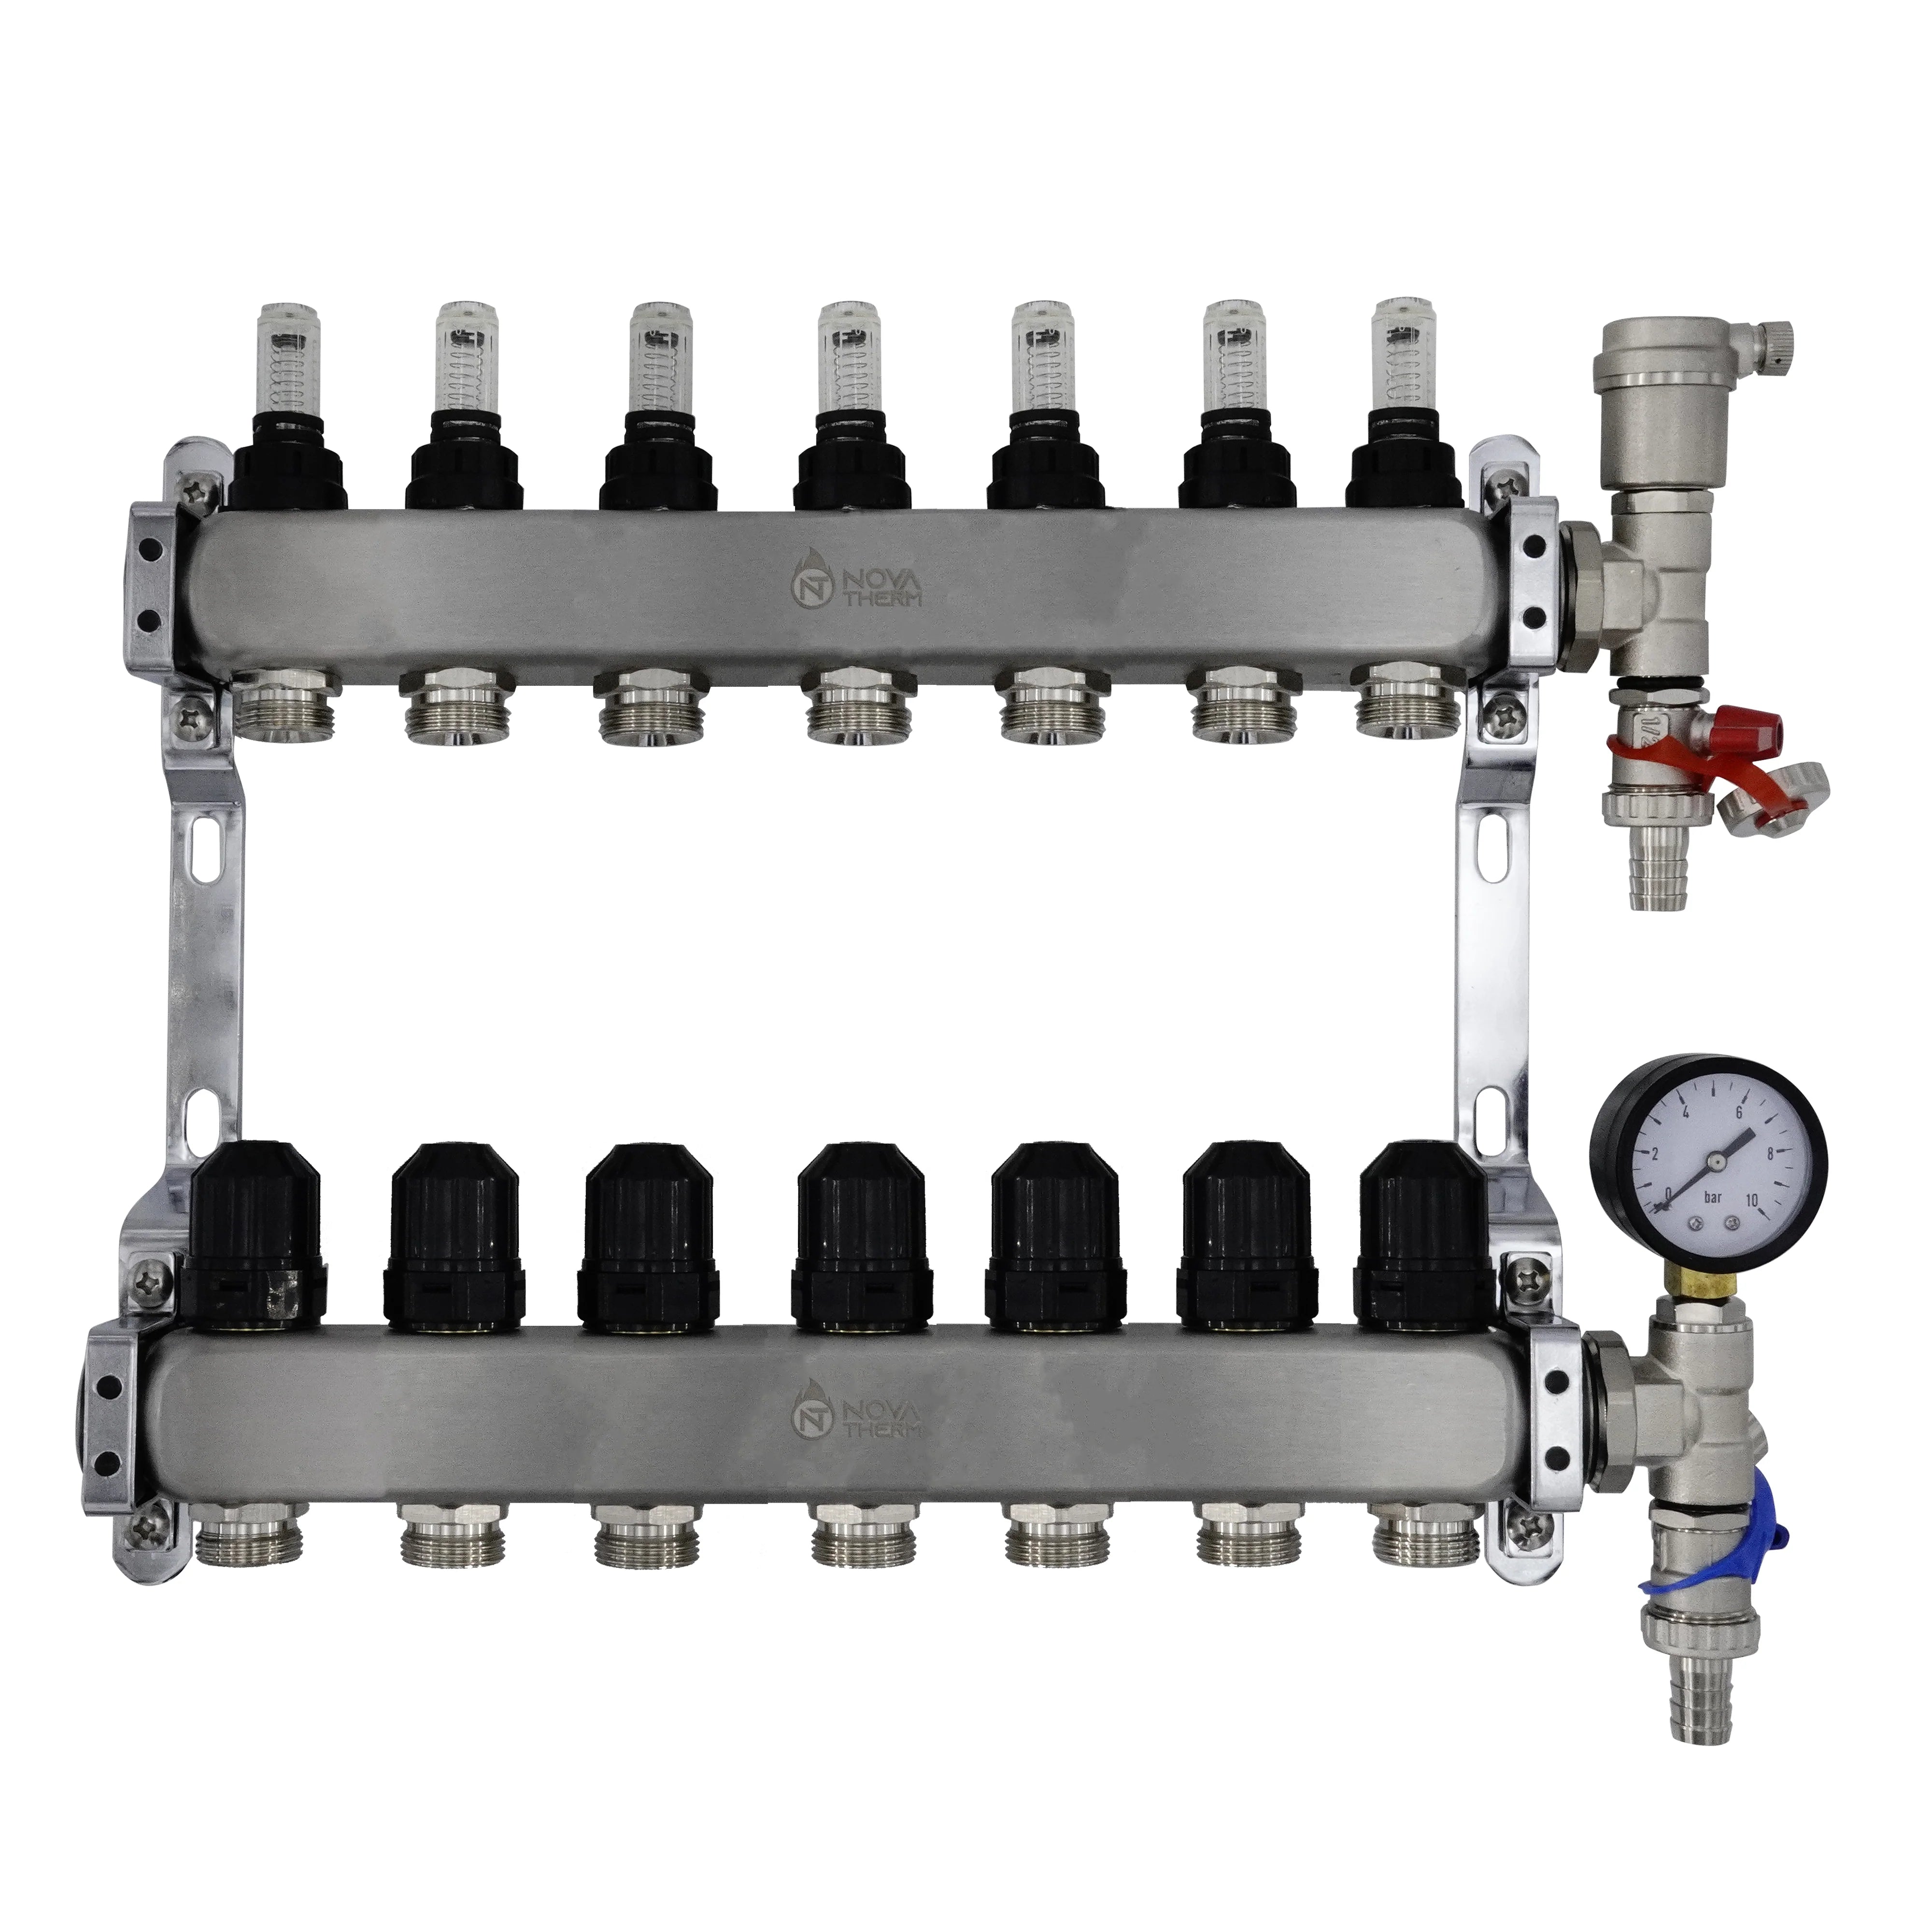 NovaTherm 140sqm Multi-Zone Water Underfloor Heating Kit